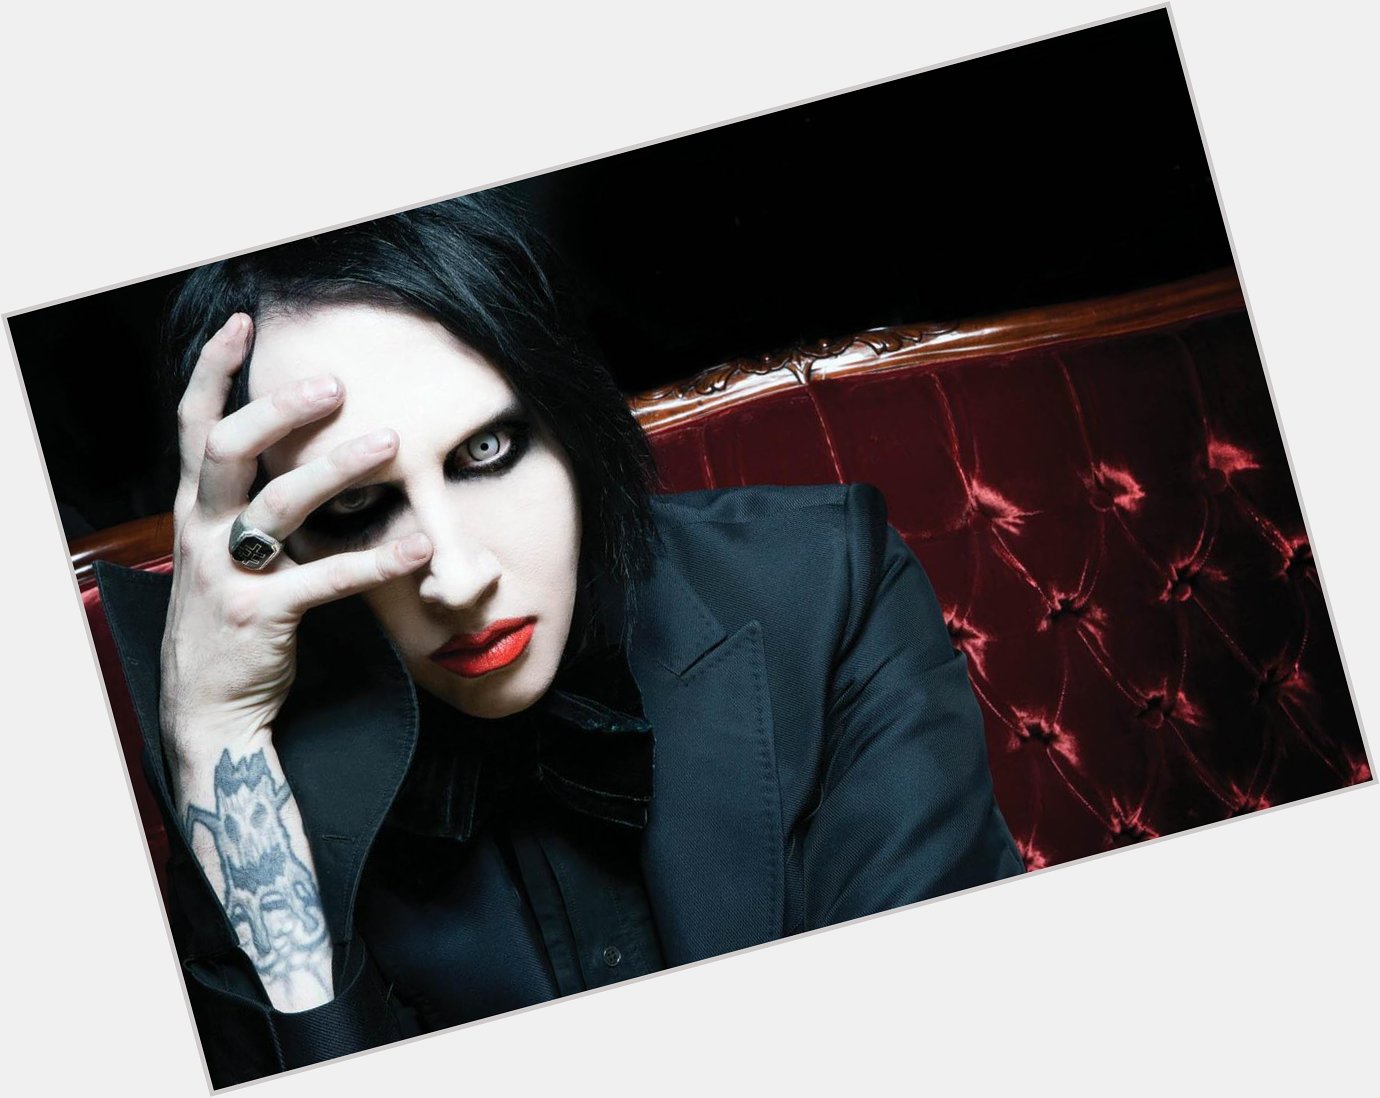 January 5th, wish happy birthday to infamous American rocker, Marilyn Manson! 